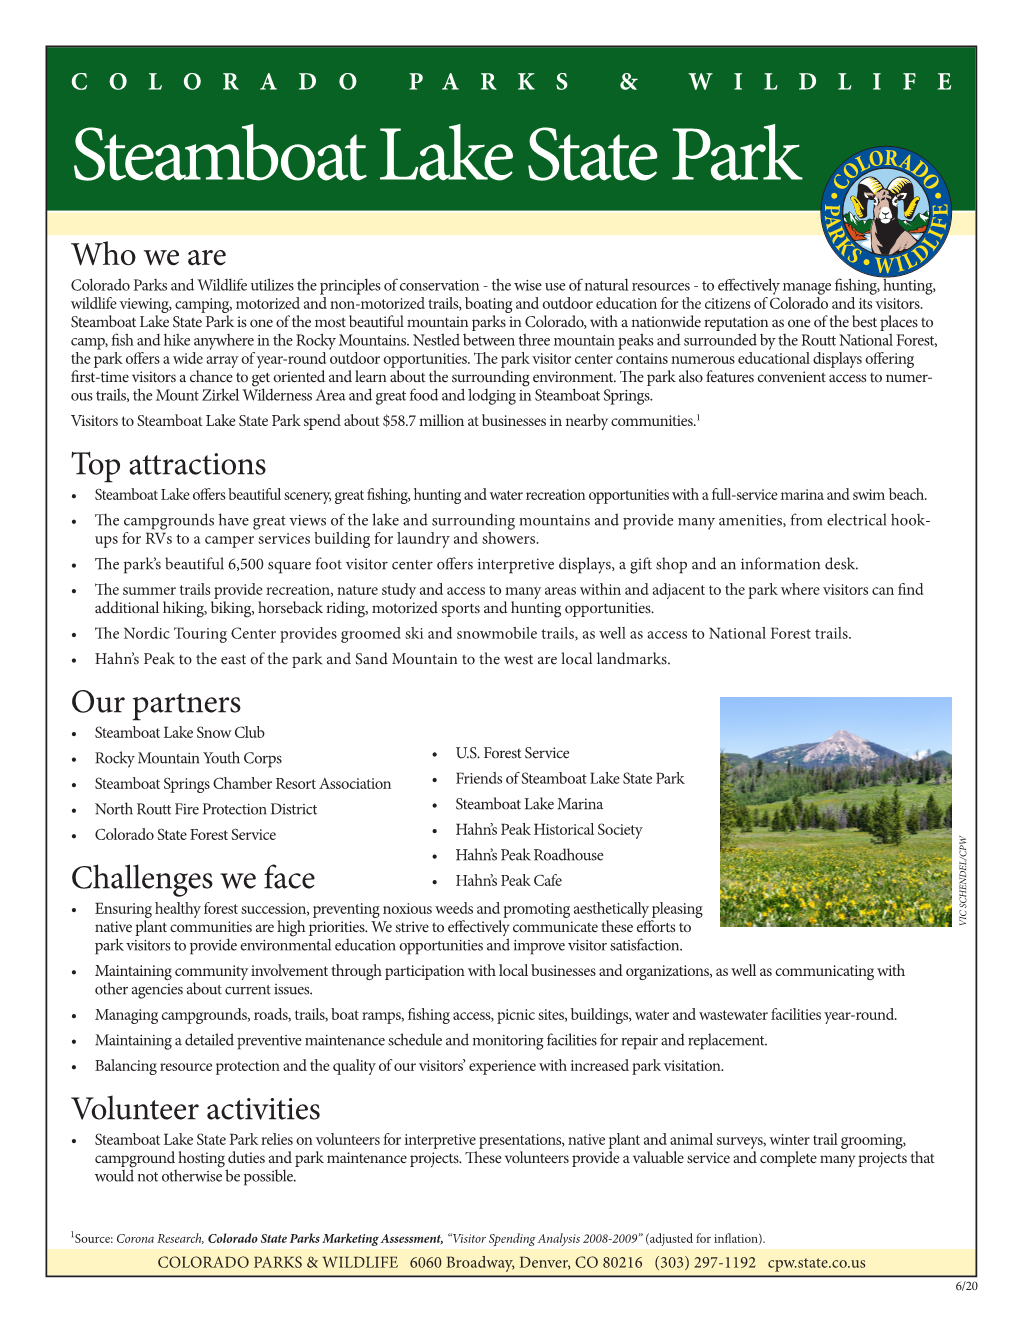 Steamboat Lake State Park Fact Sheet